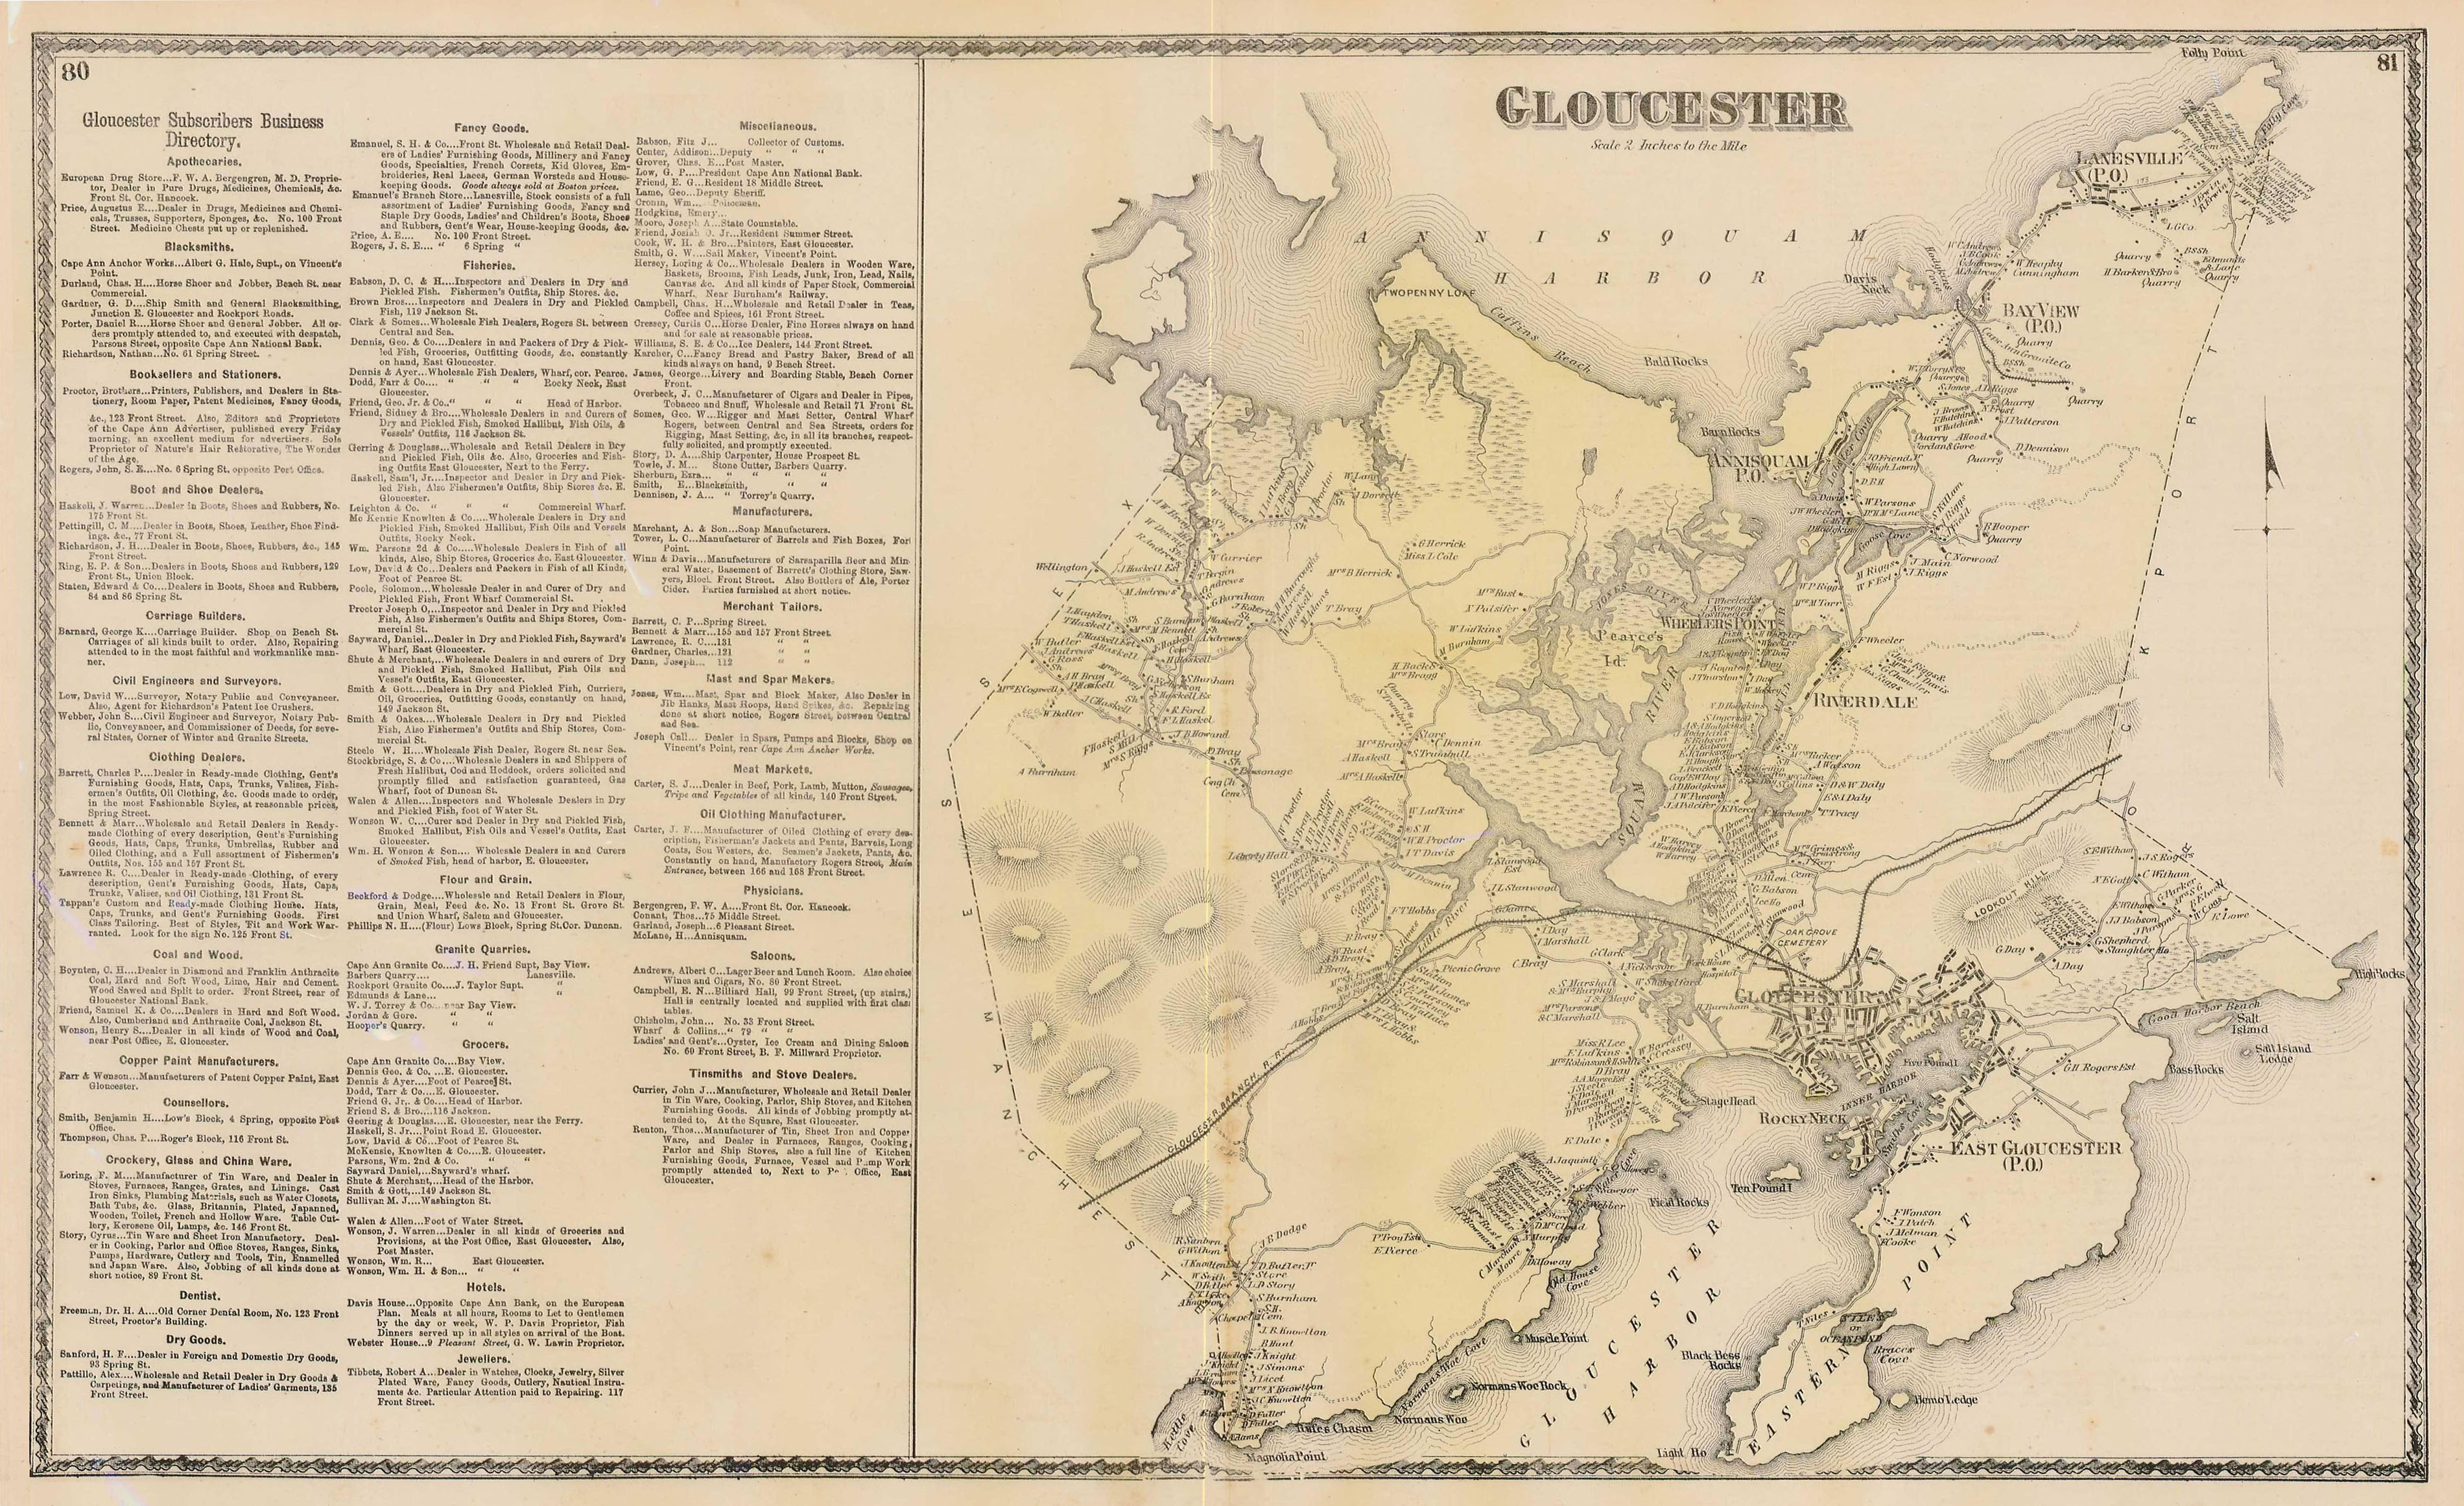 1872 Gloucester map